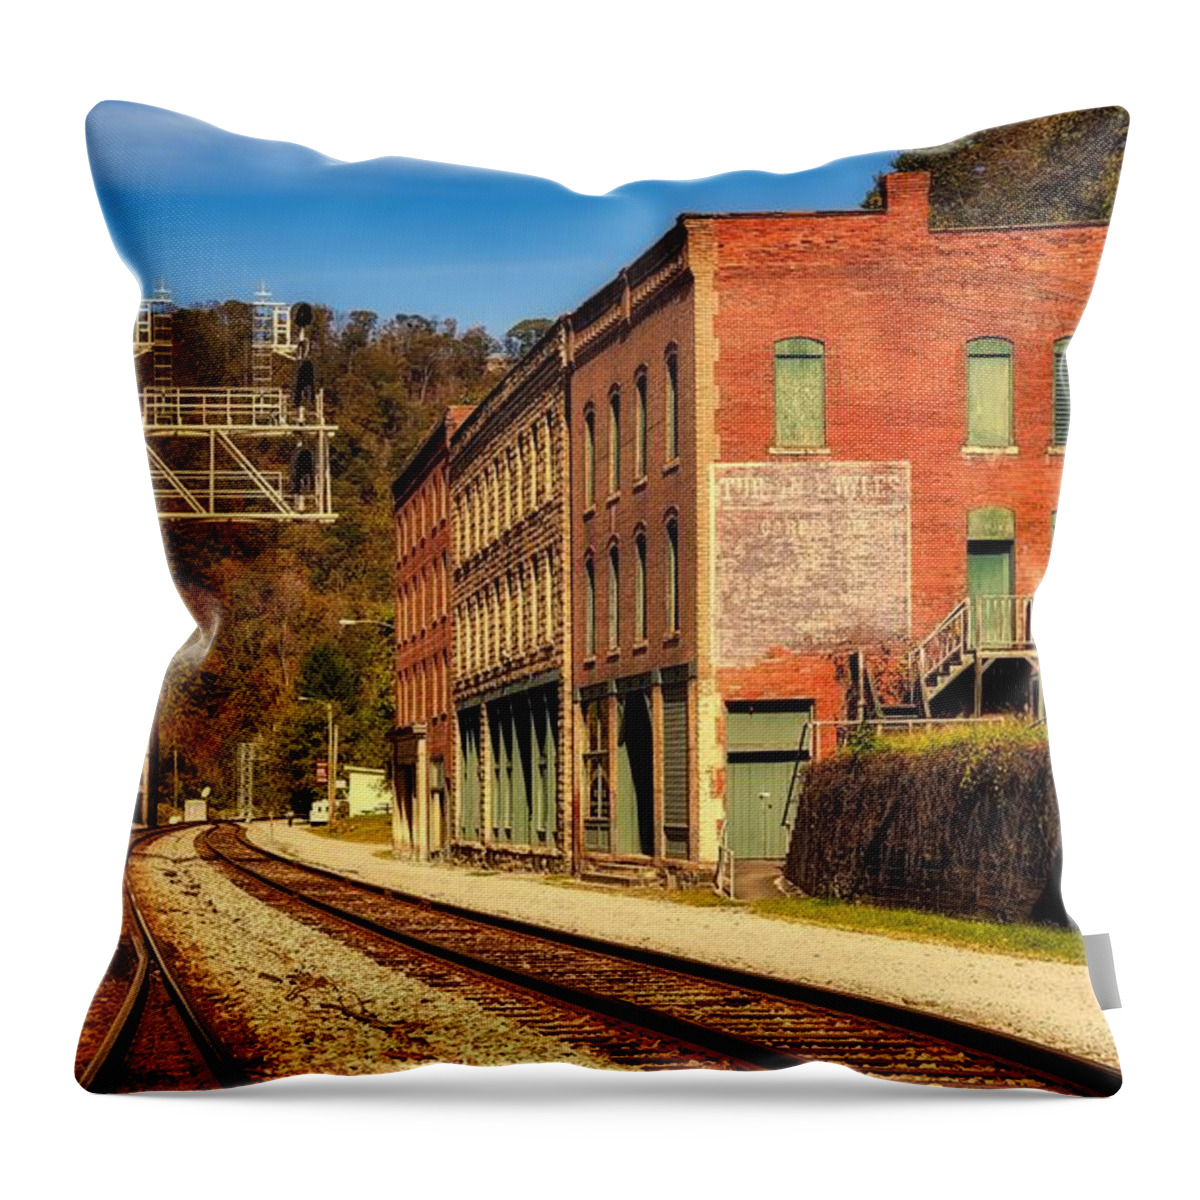 Appalachia Throw Pillow featuring the photograph Appalachian Coal Town by Mountain Dreams